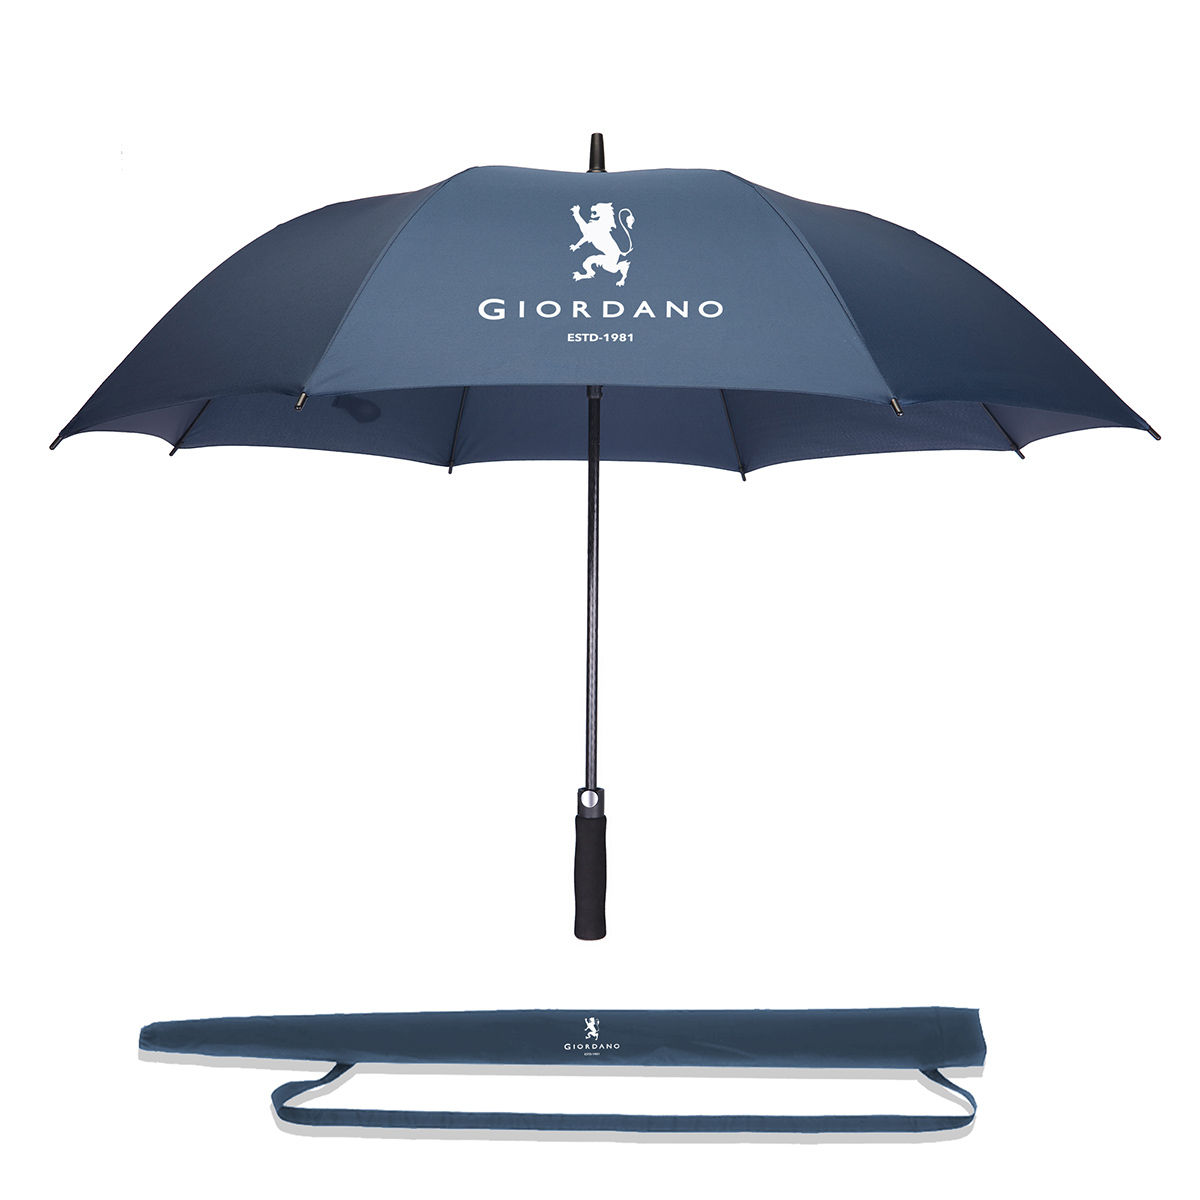 Giordano Automatic Unisex Umbrella for UV Protection Monsoon Rainy & Sun - Navy Blue